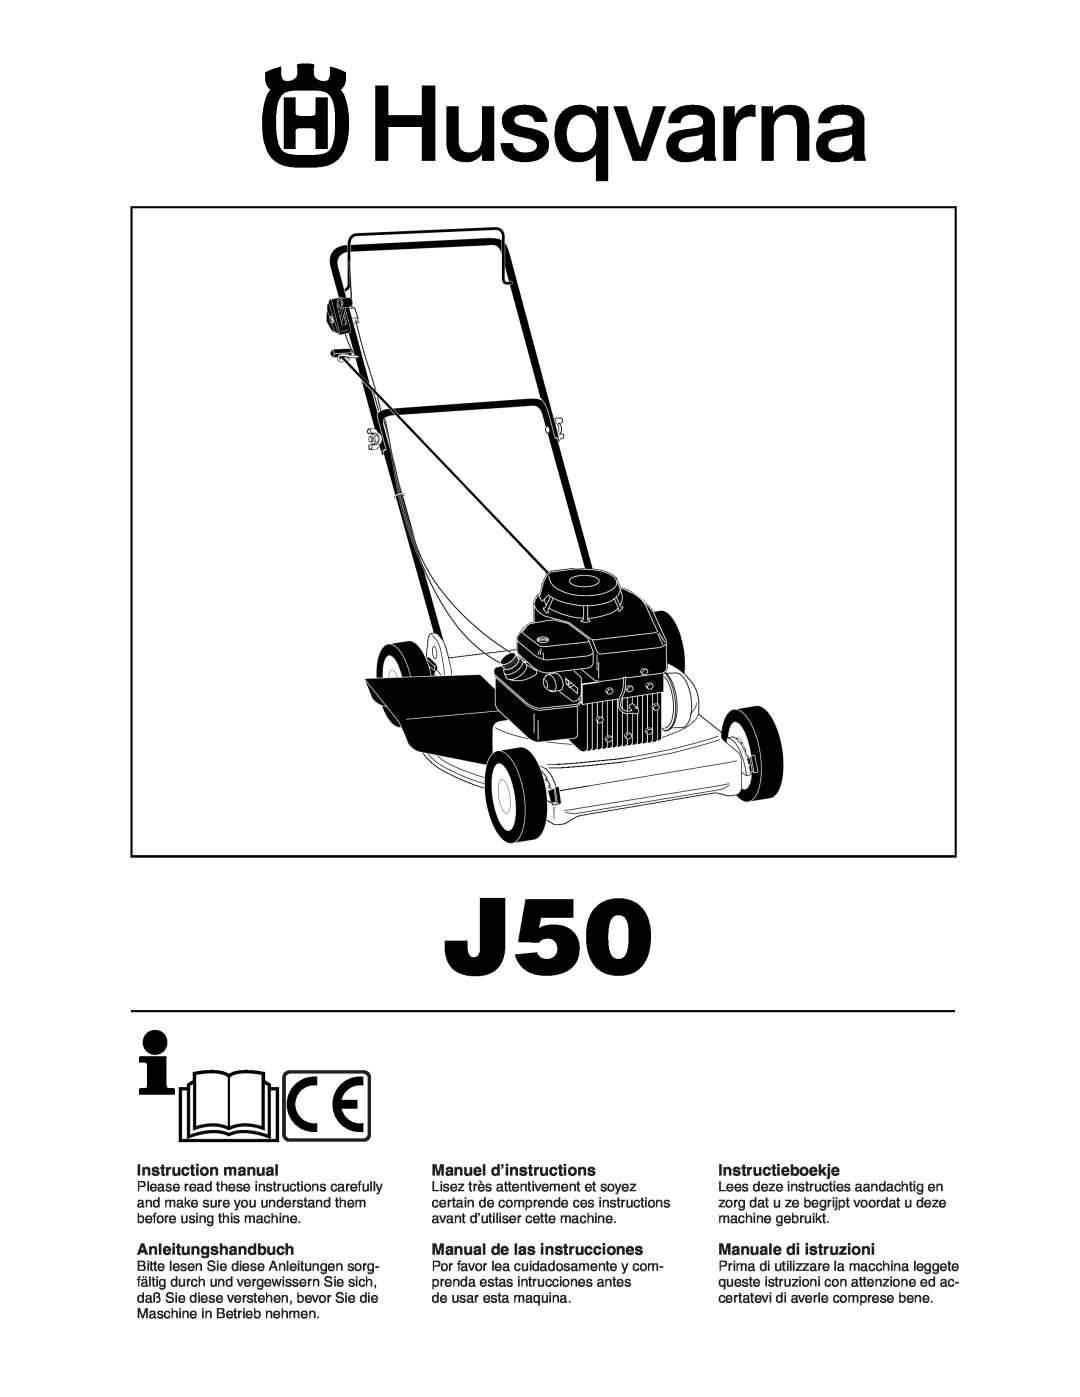 Husqvarna J50 instruction manual Anleitungshandbuch, Manuel d’instructions, Manual de las instrucciones, Instructieboekje 